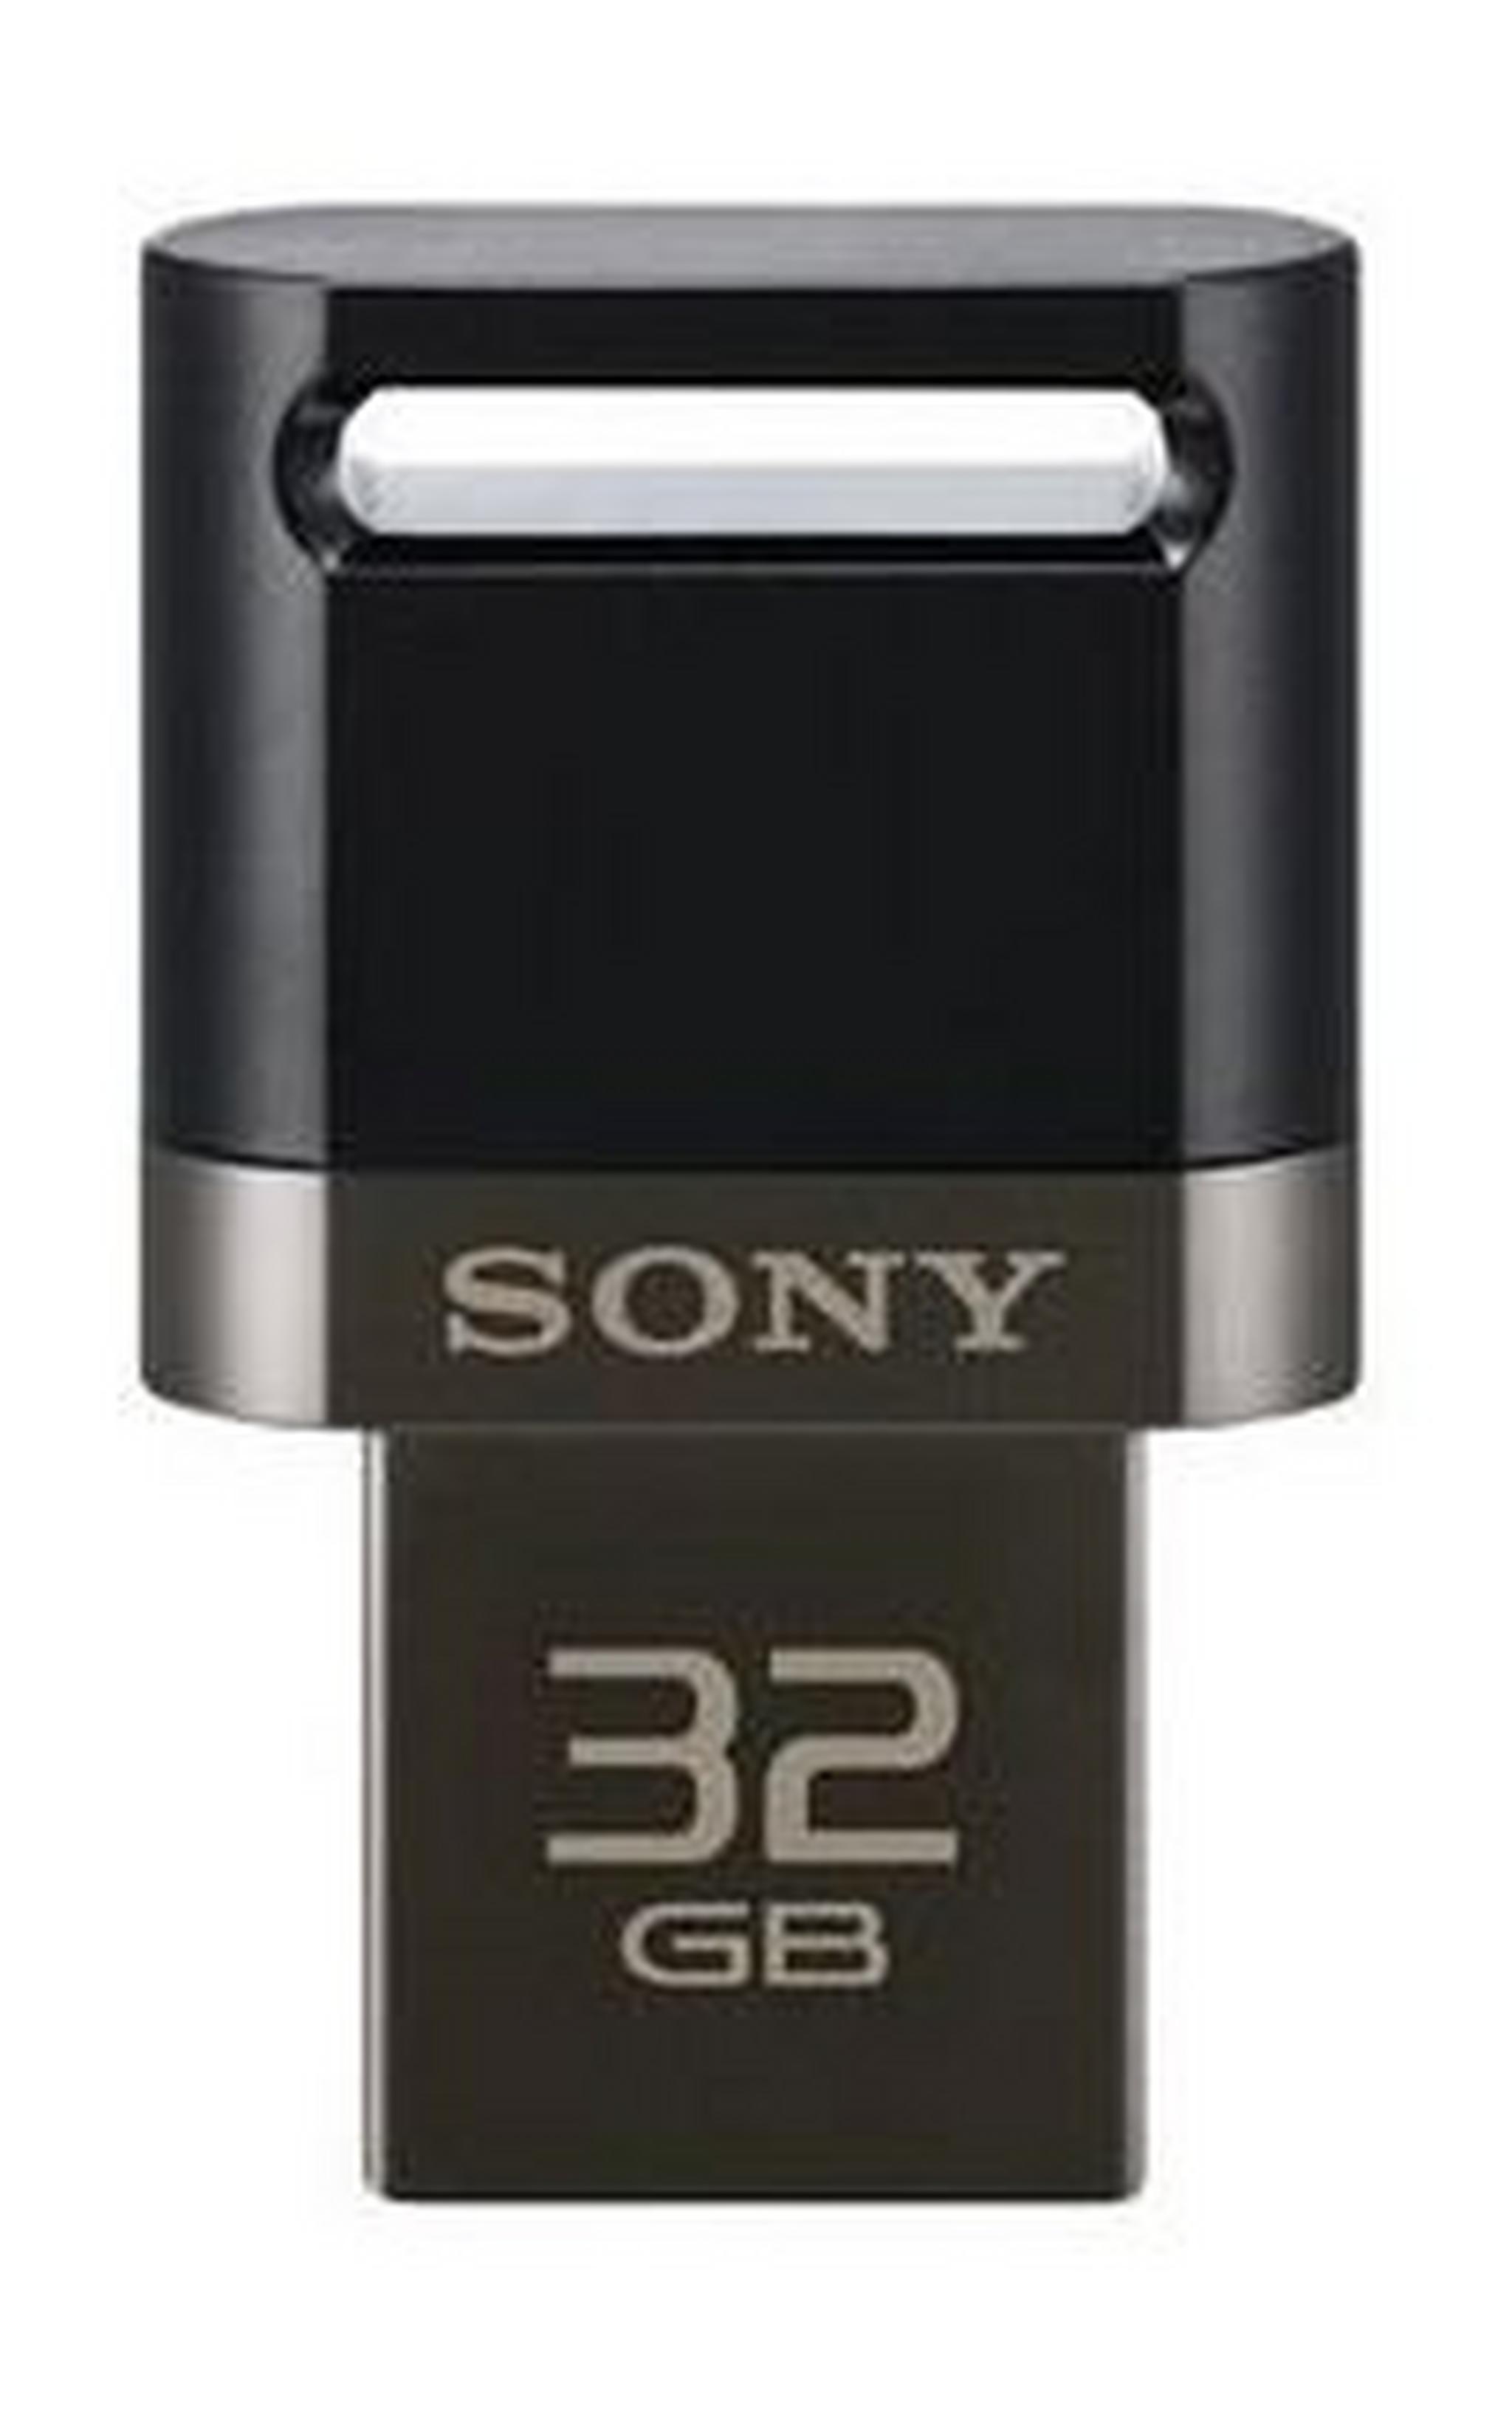 Sony 32GB USB On-the-Go 130 Mbps Flash Drive (USM32SA3) - Black